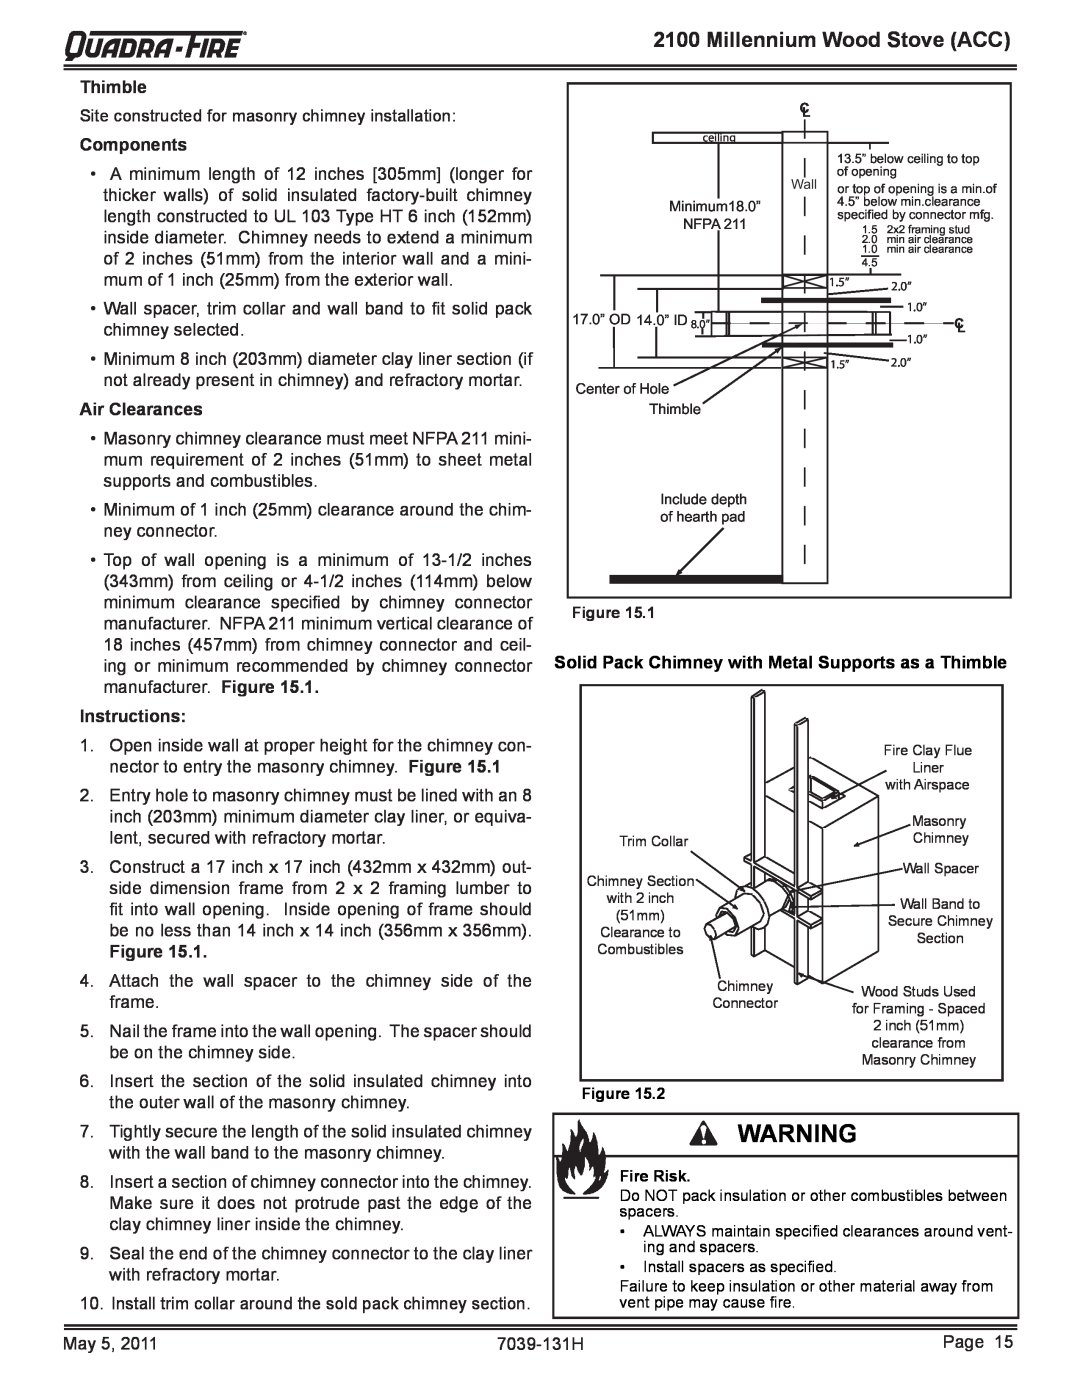 Quadra-Fire 21M-ACC owner manual Millennium Wood Stove ACC, Thimble, Components, Air Clearances, Instructions 